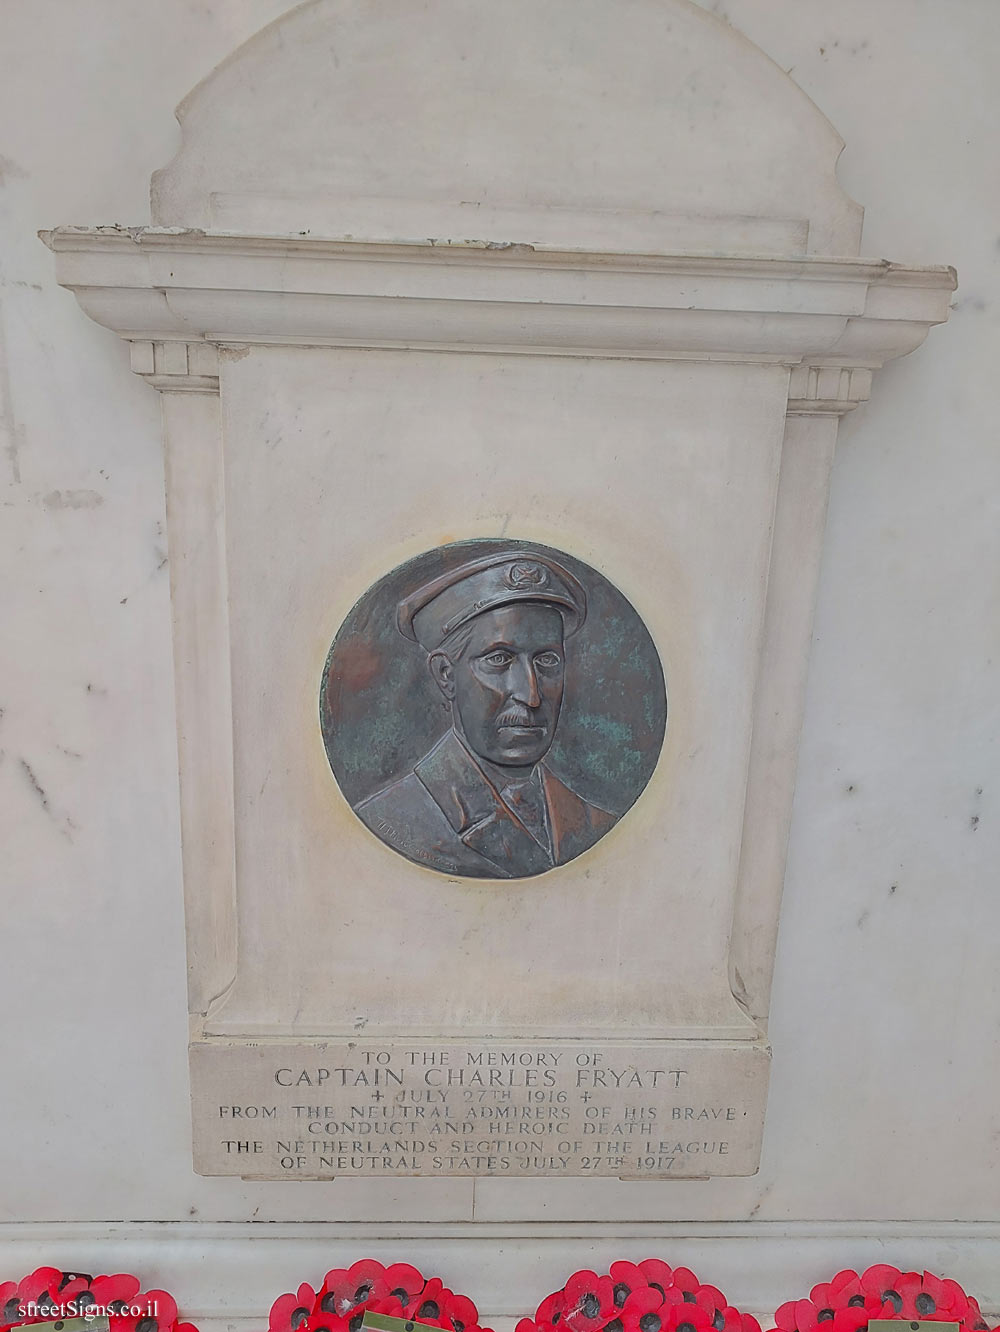 London - Liverpool Station - Memorial plaque to Charles Fryatt